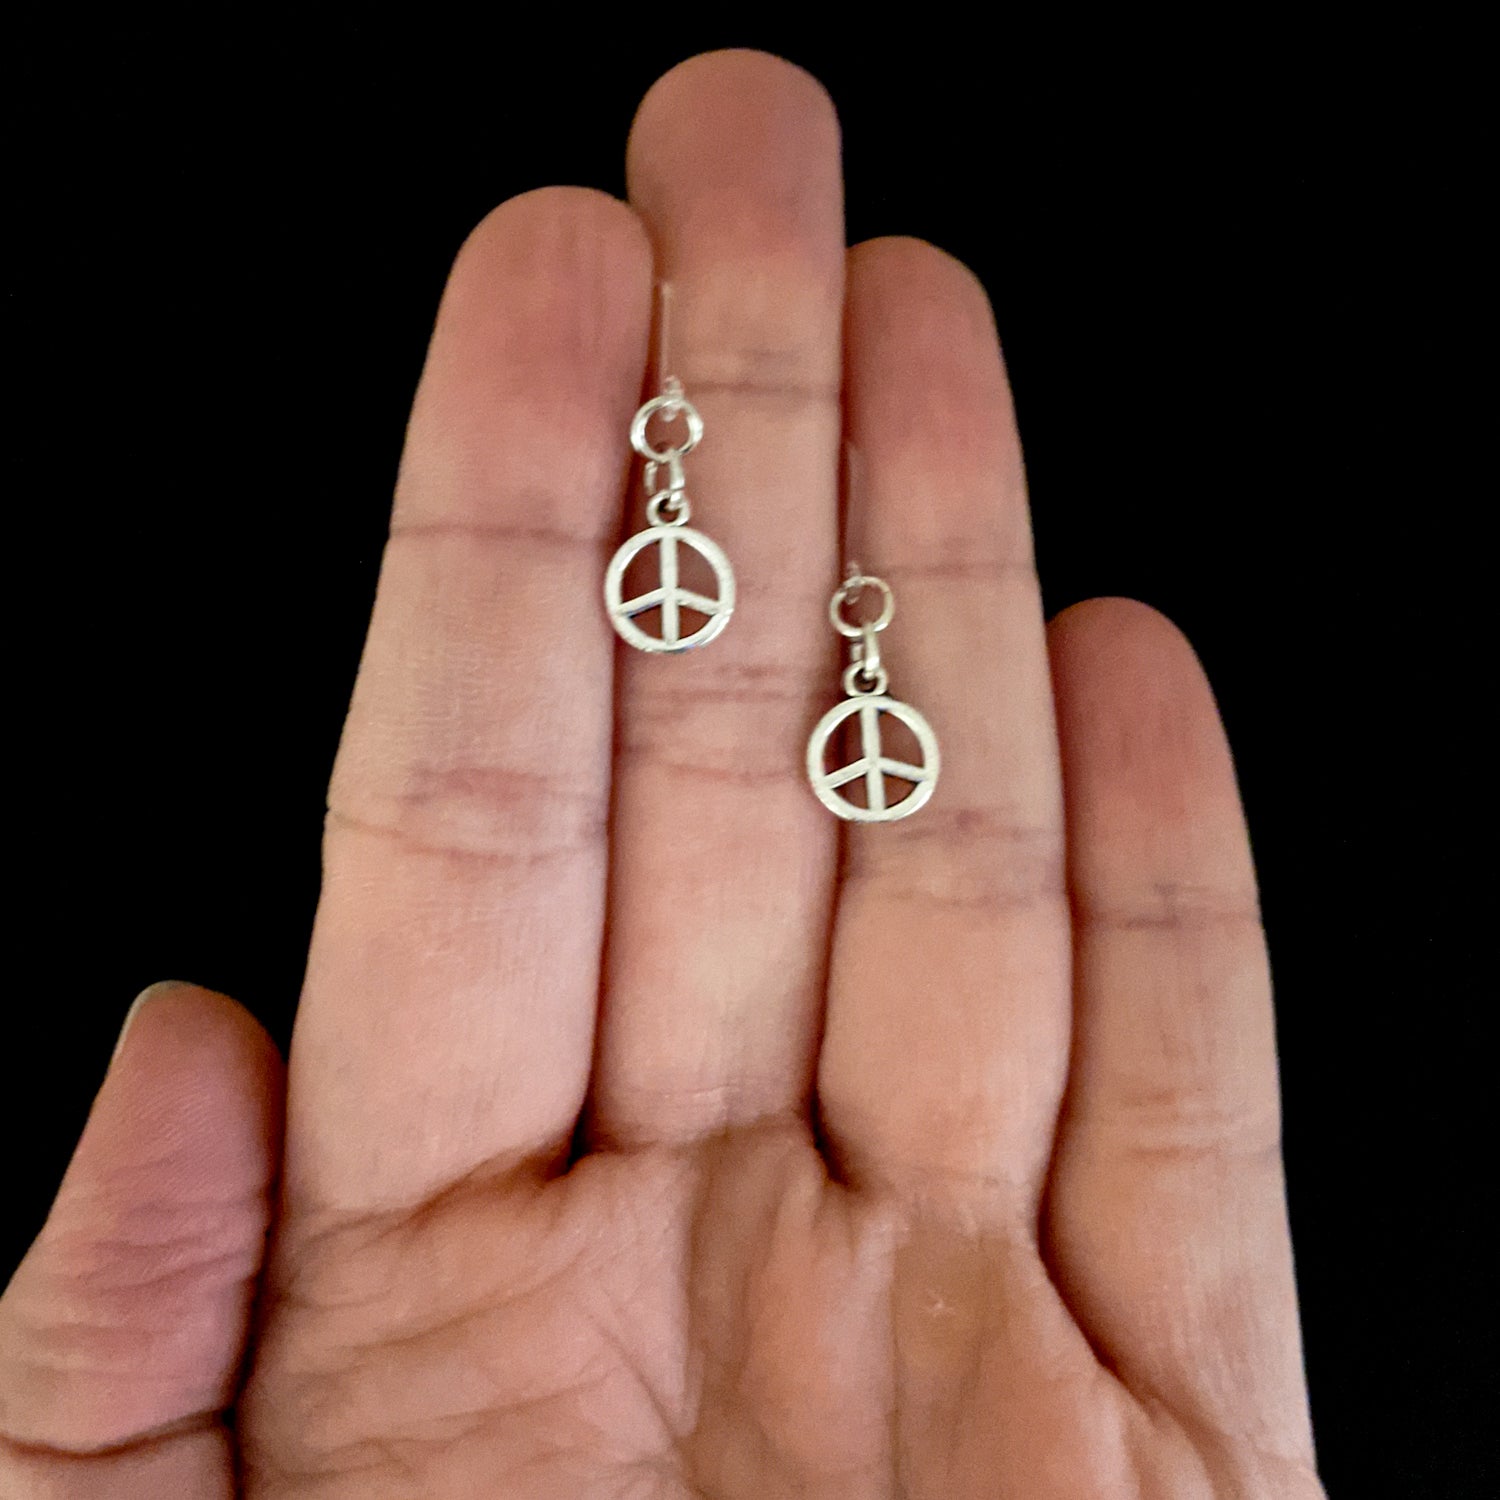 Tiny Peace Drop Earrings (Dangles) - size comp;arison hand